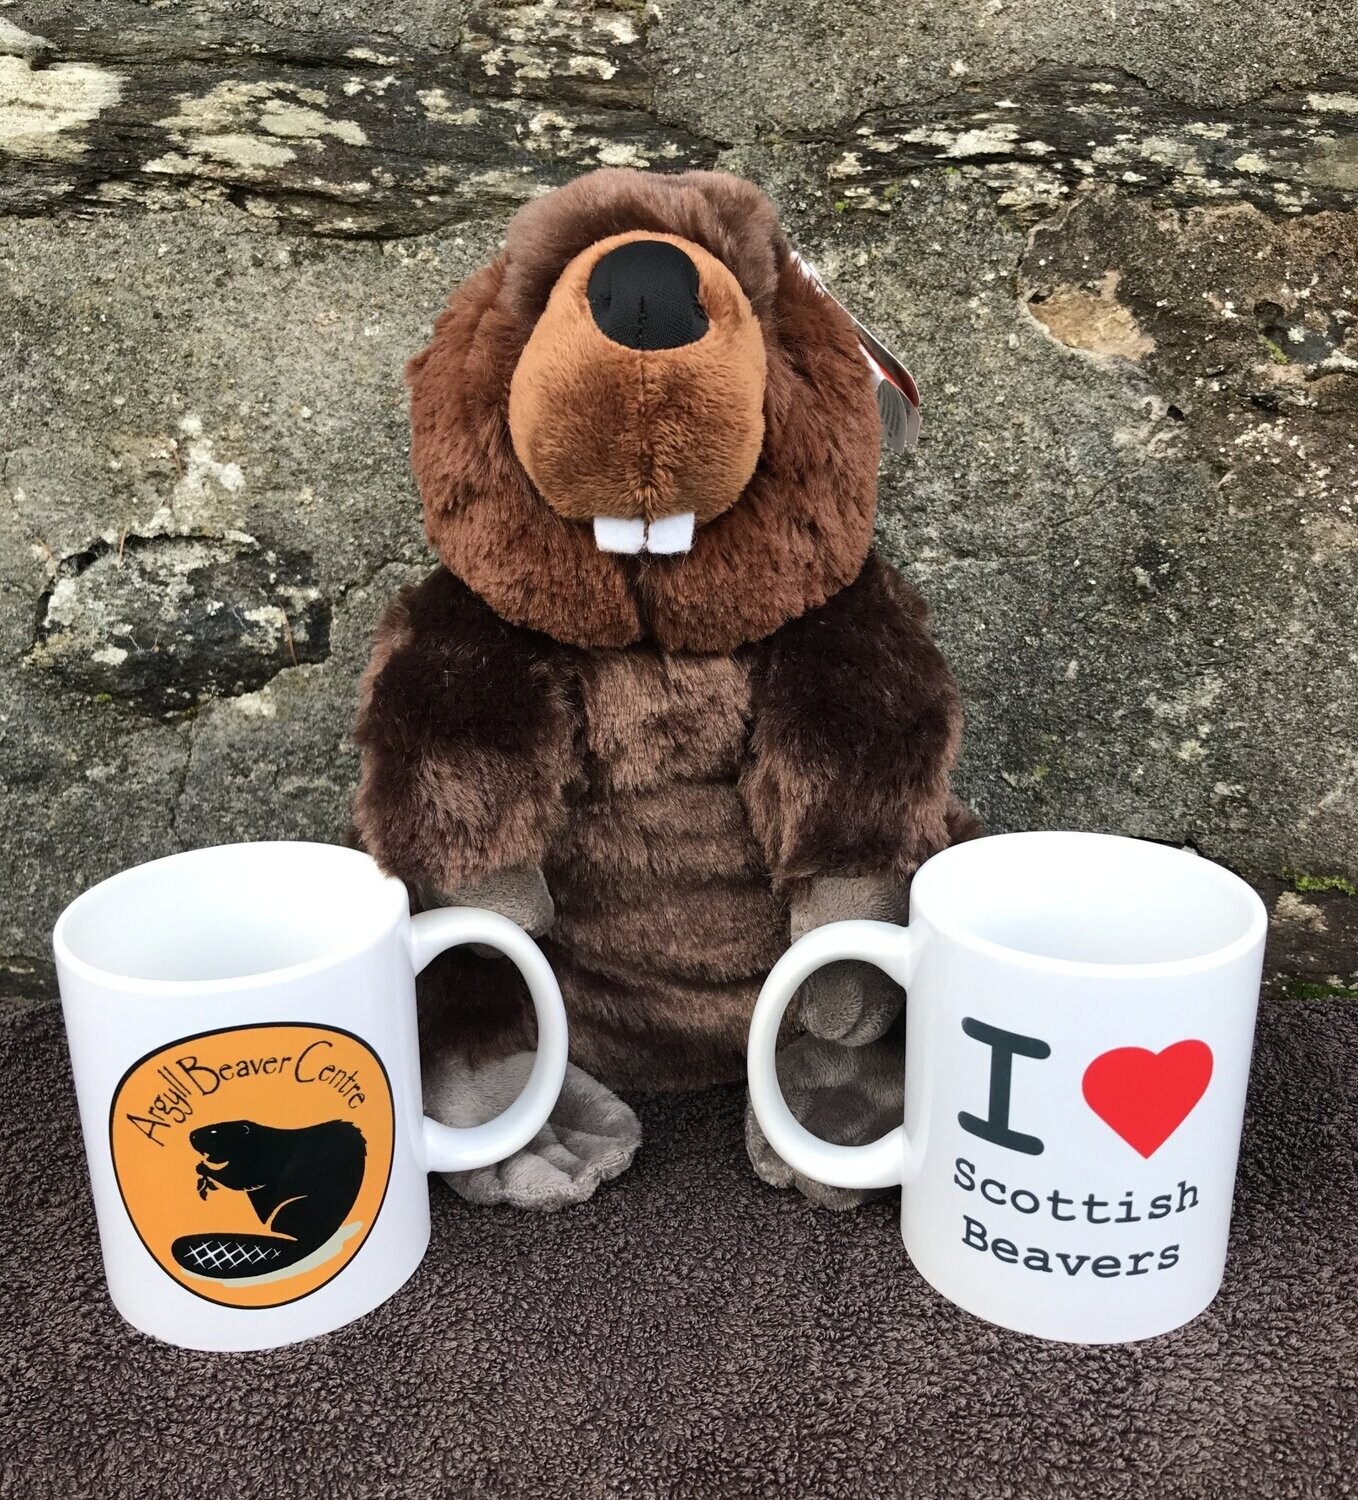 Argyll Beaver Centre/I Love Scottish Beavers Mug